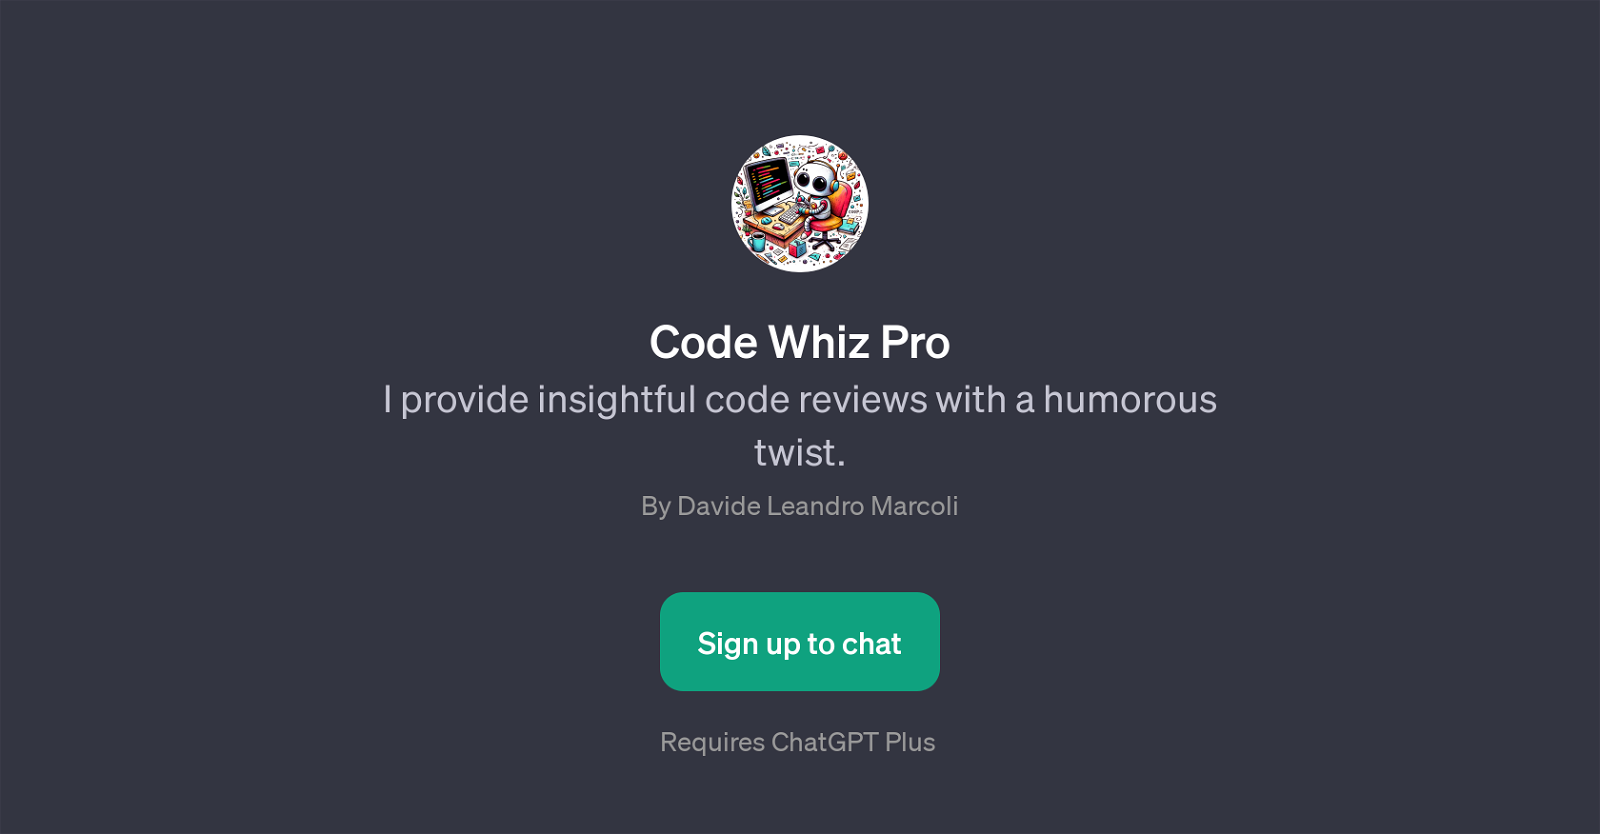 Code Whiz Pro website